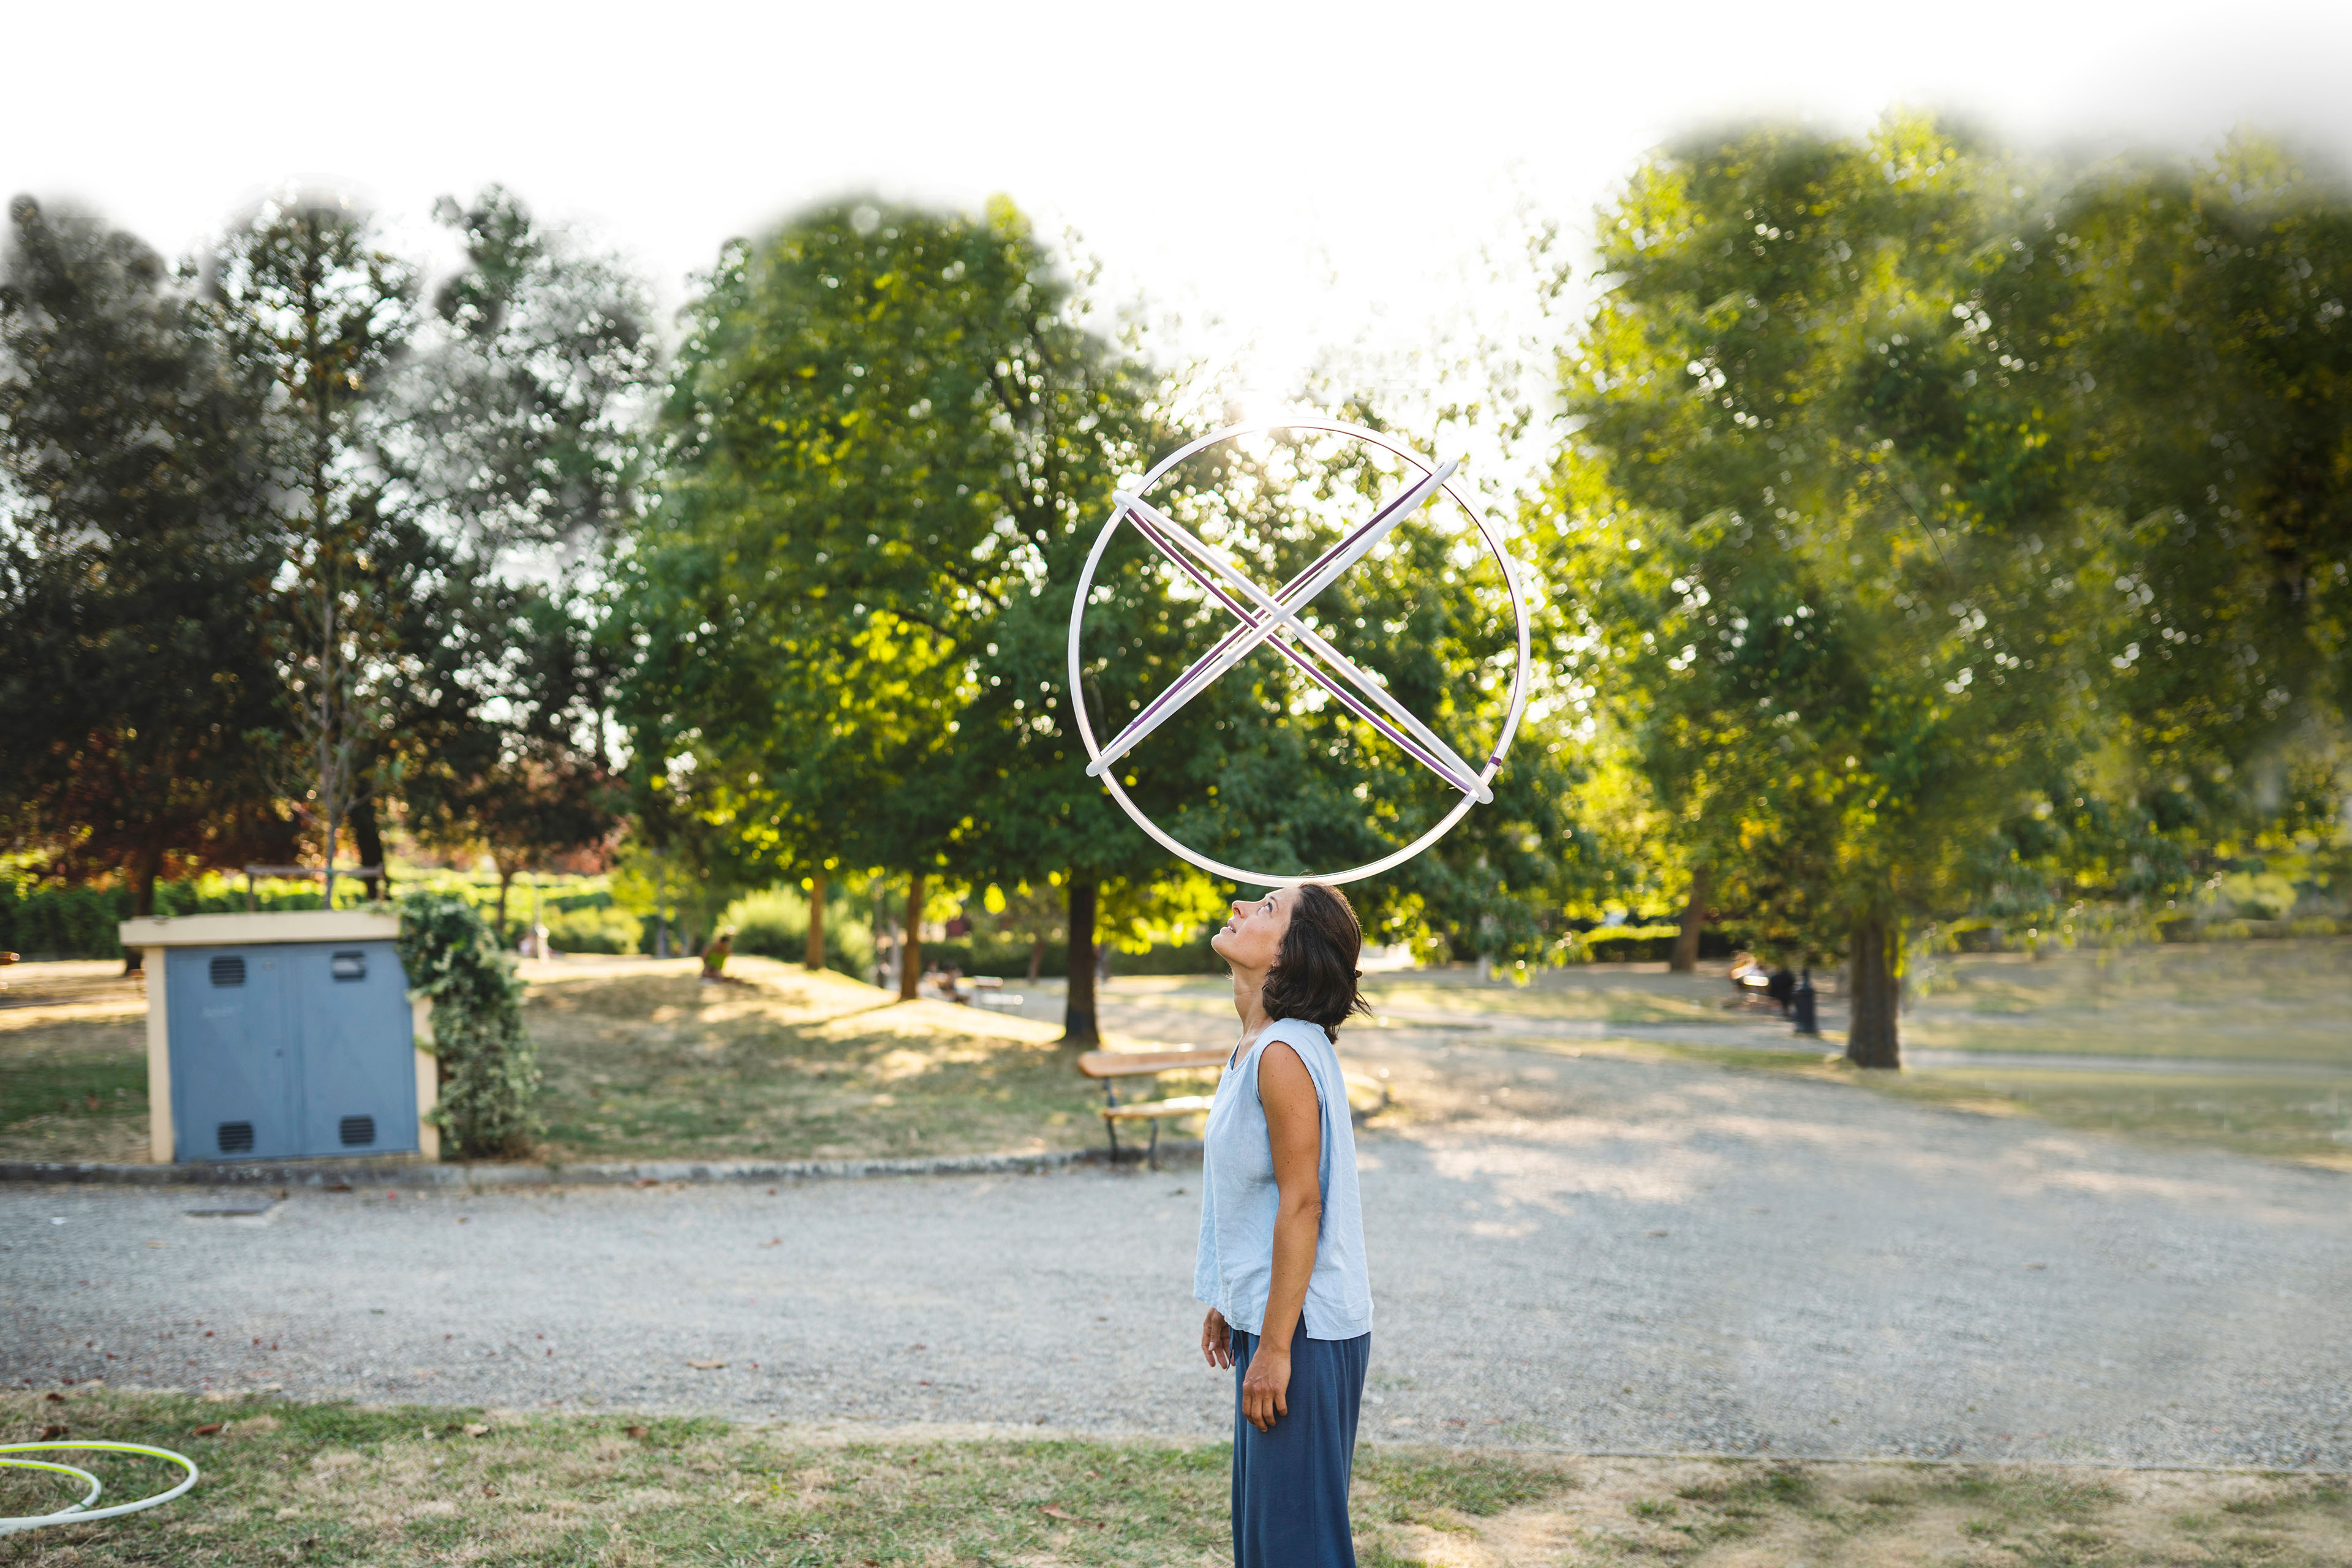 Woman balancing hula hoop on her head at the park